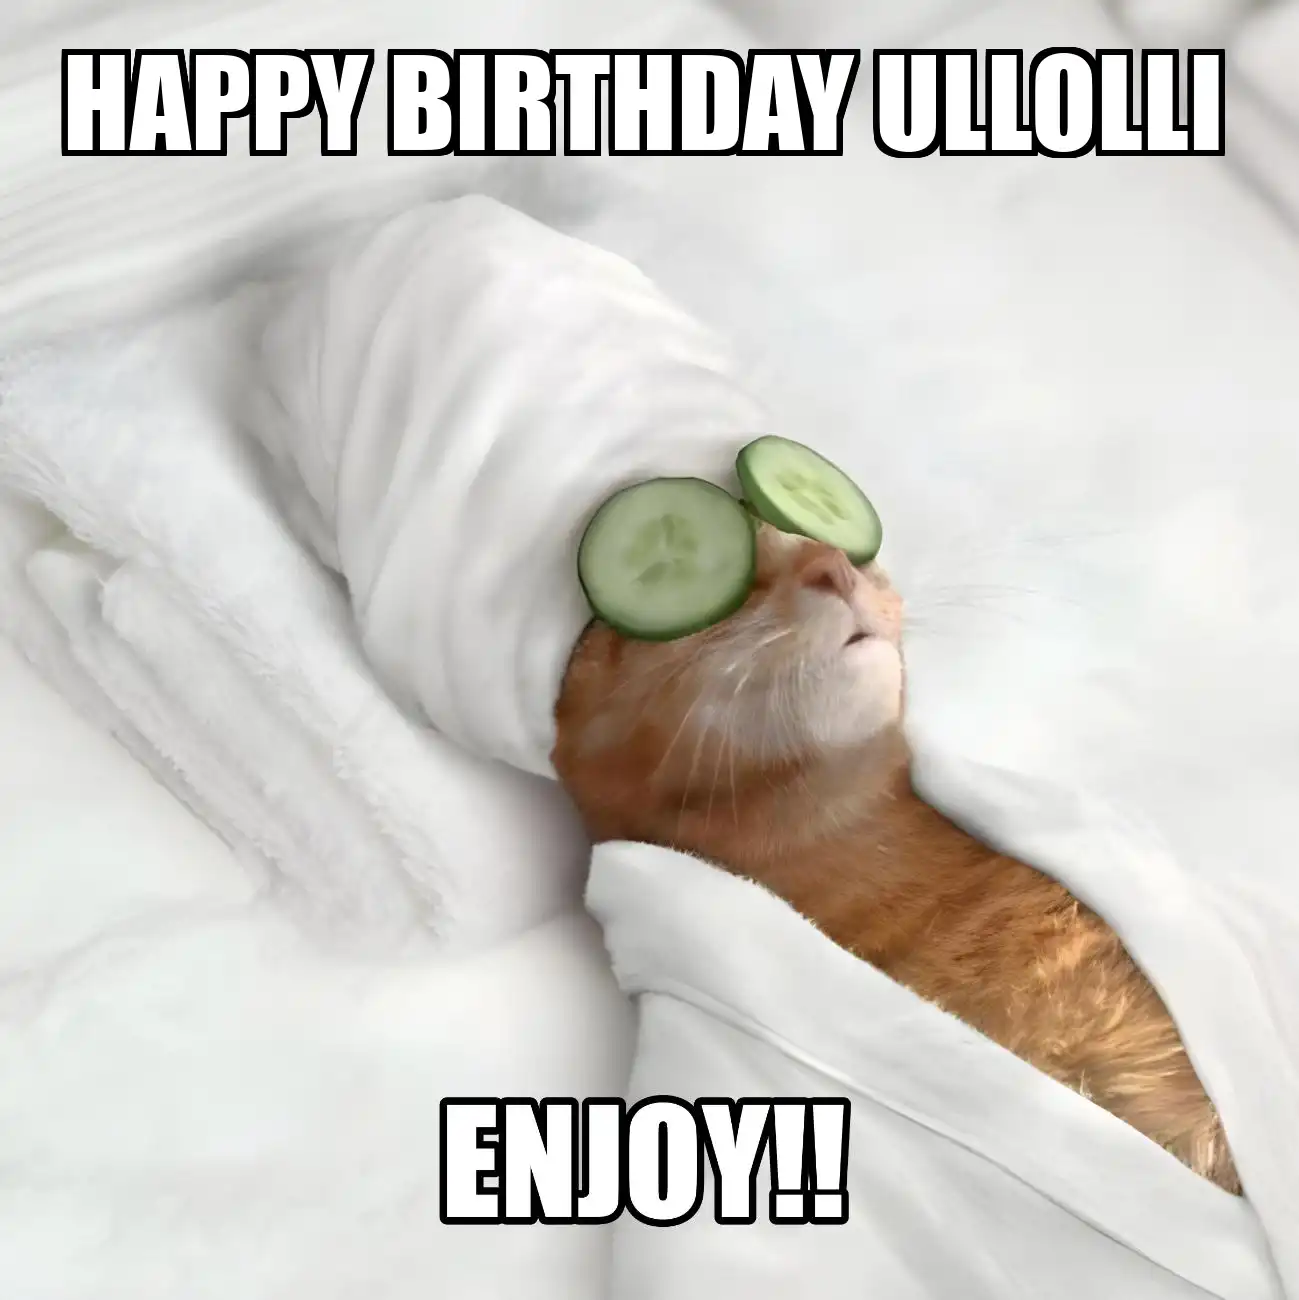 Happy Birthday Ullolli Enjoy Cat Meme